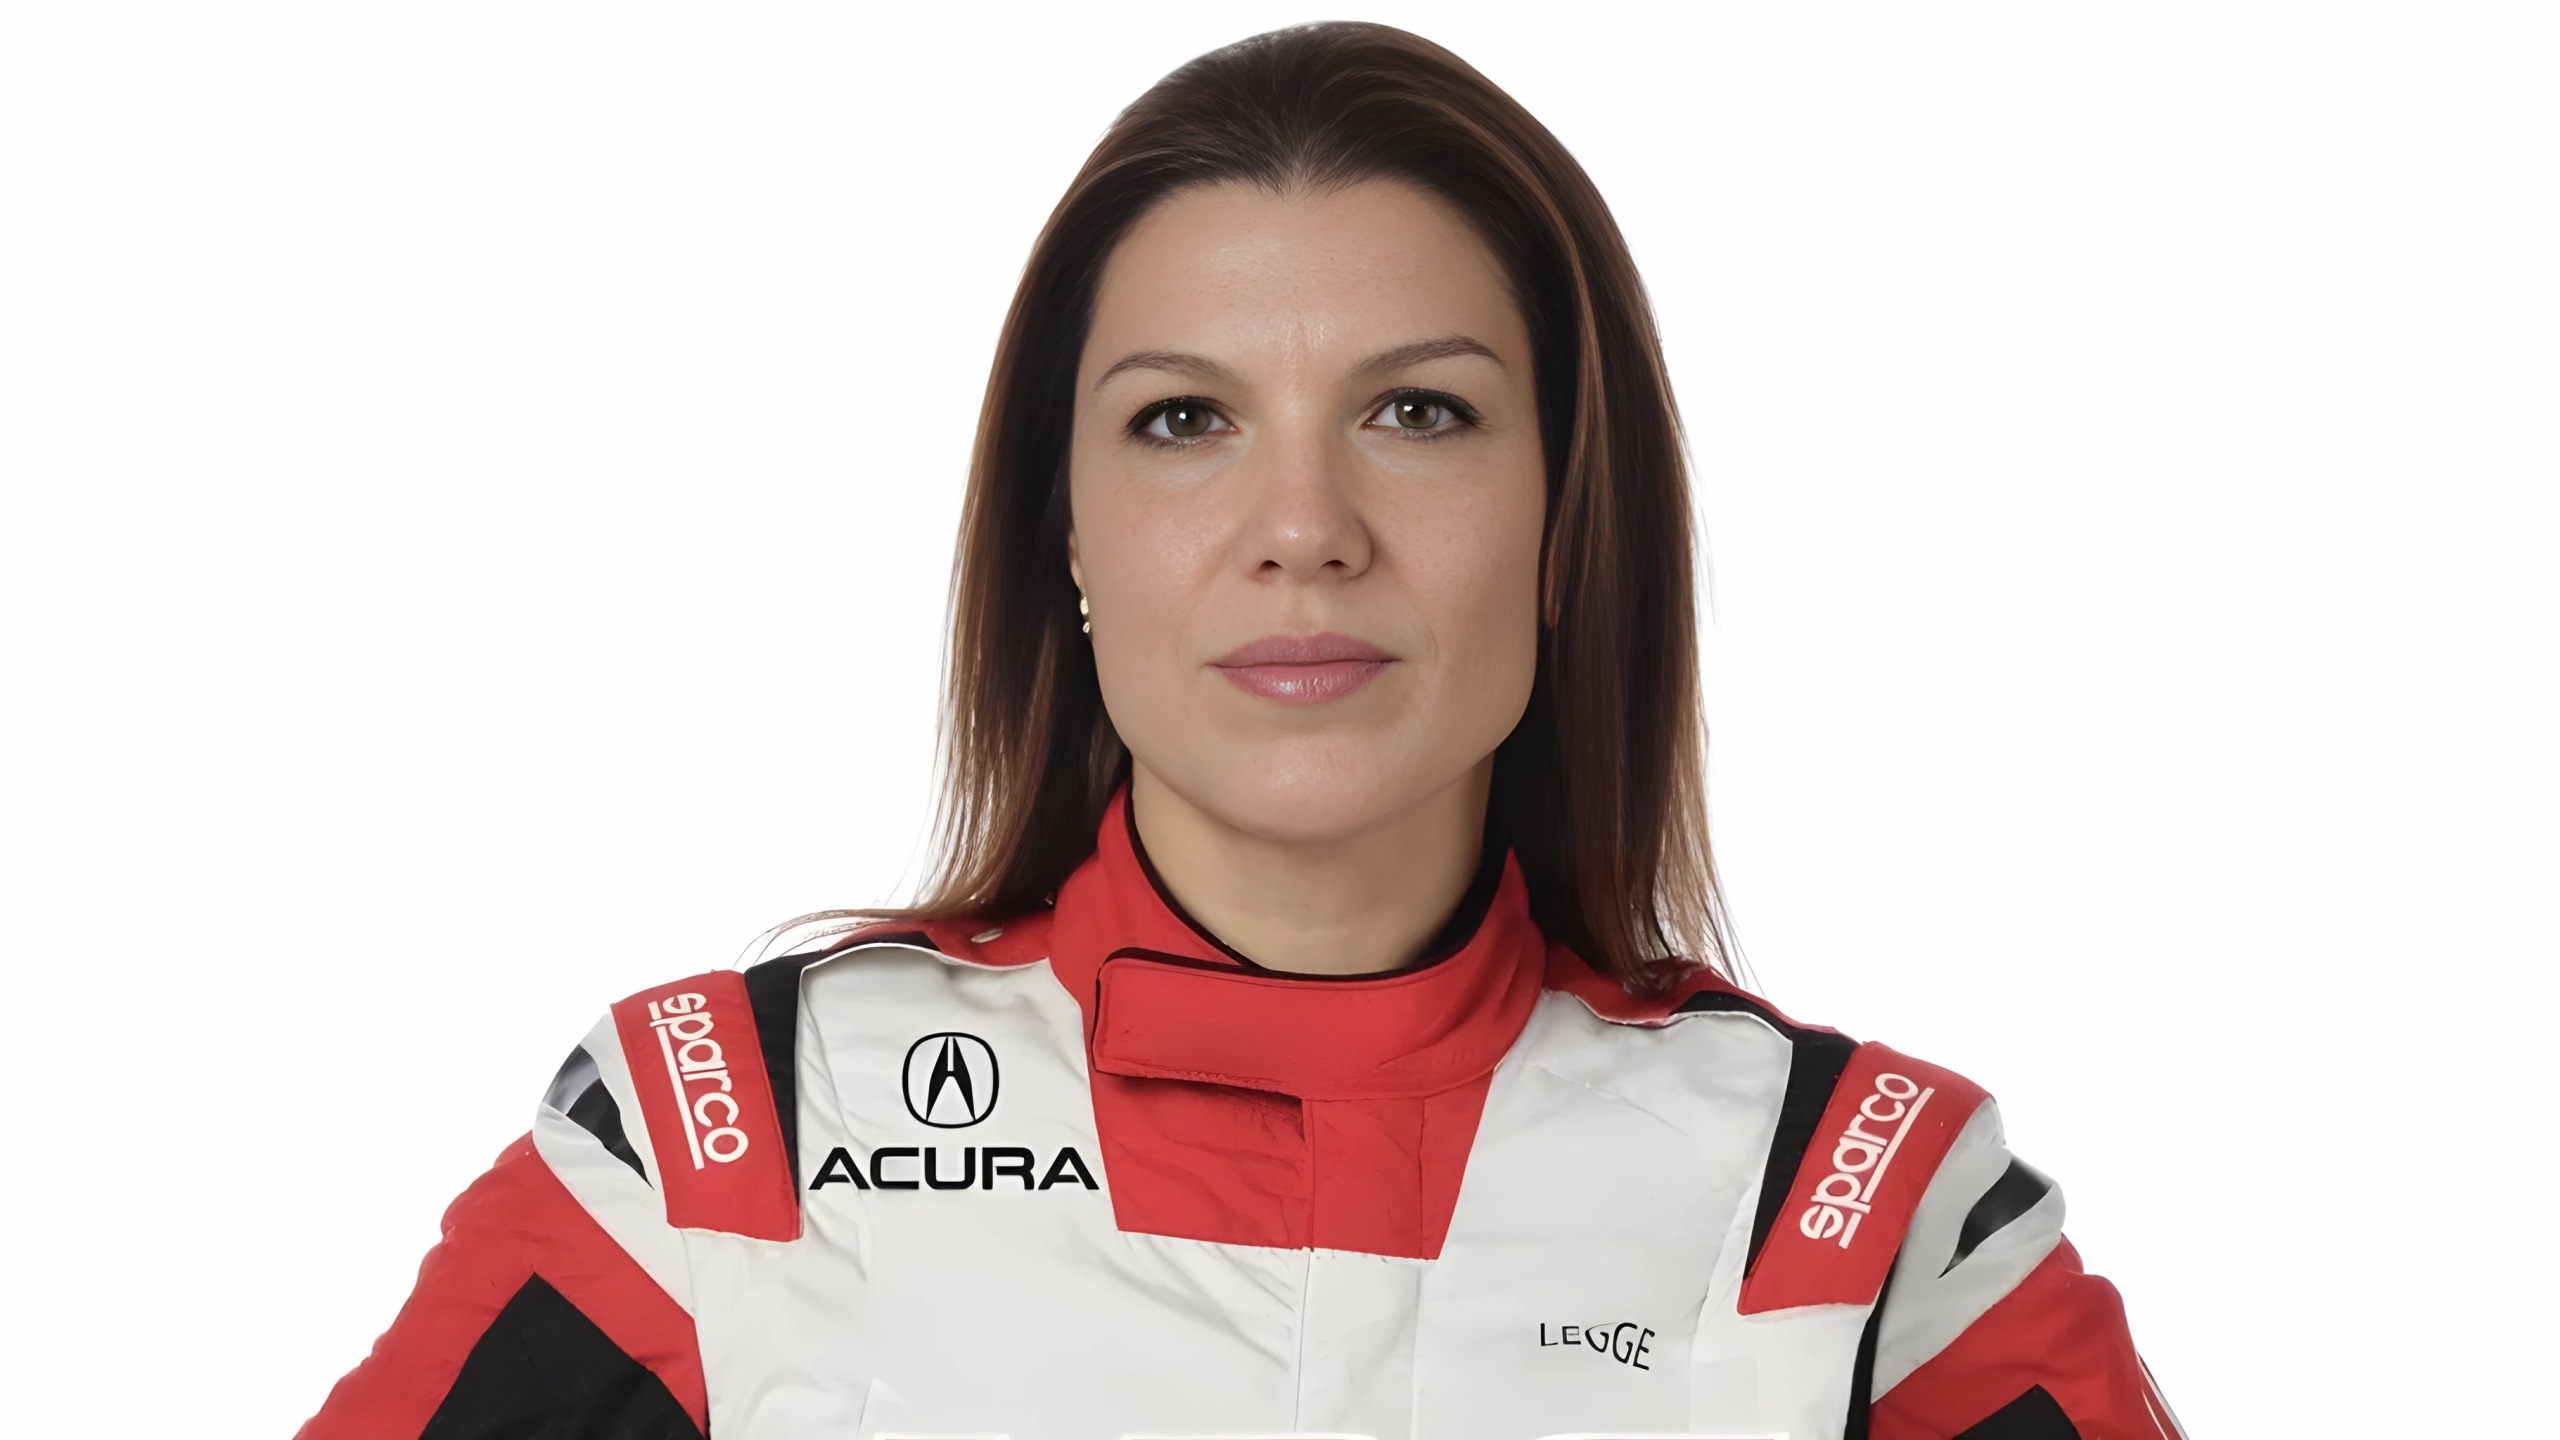 British Professional Auto Racing Driver, Katherine Legge